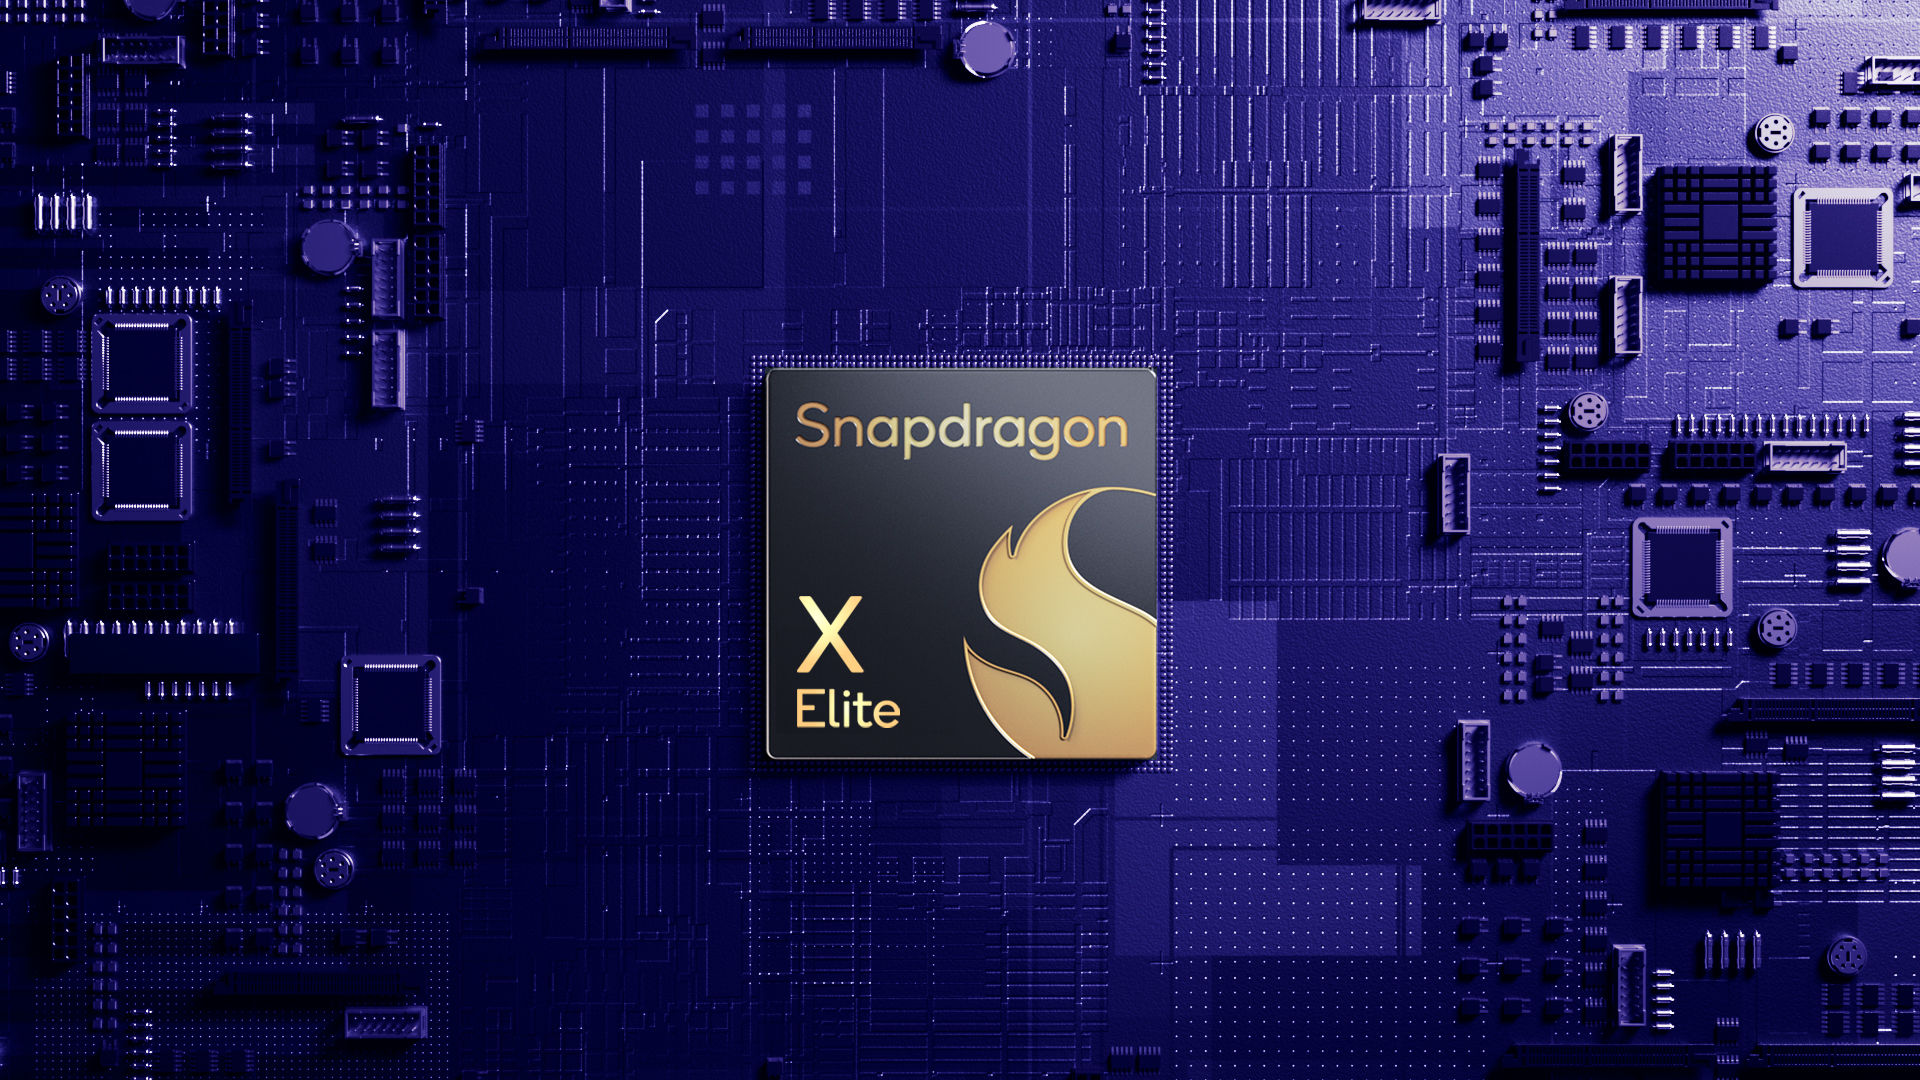 snapdragon-x-elite-benchmark-7.jpg